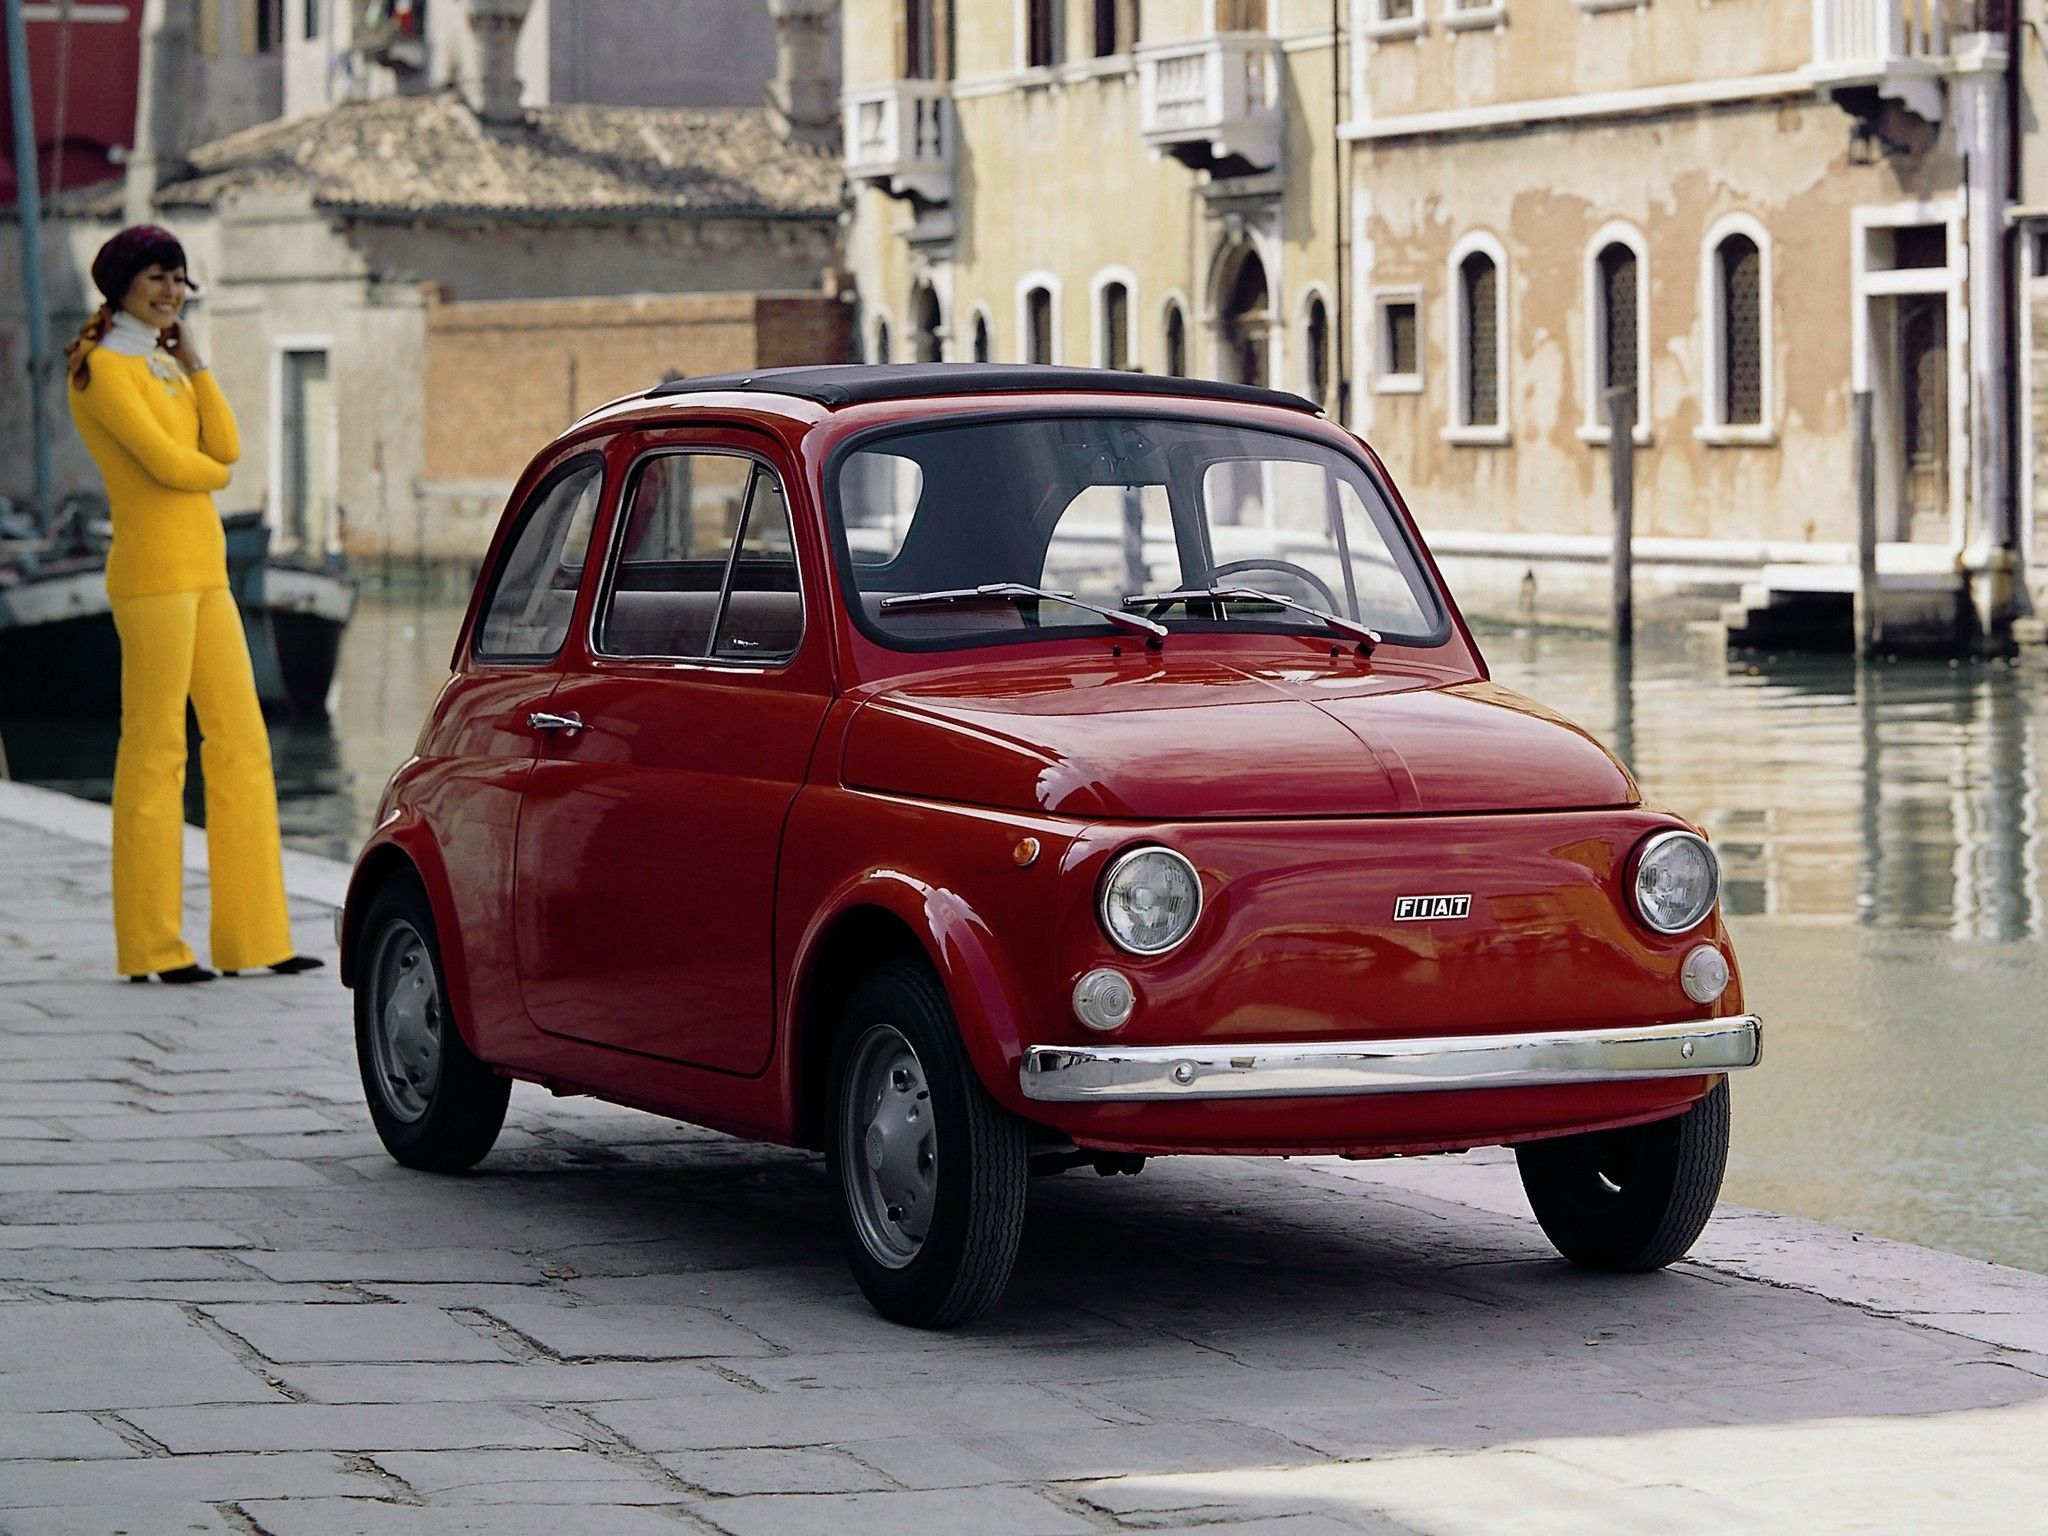 The Fiat 500 Rinnovata